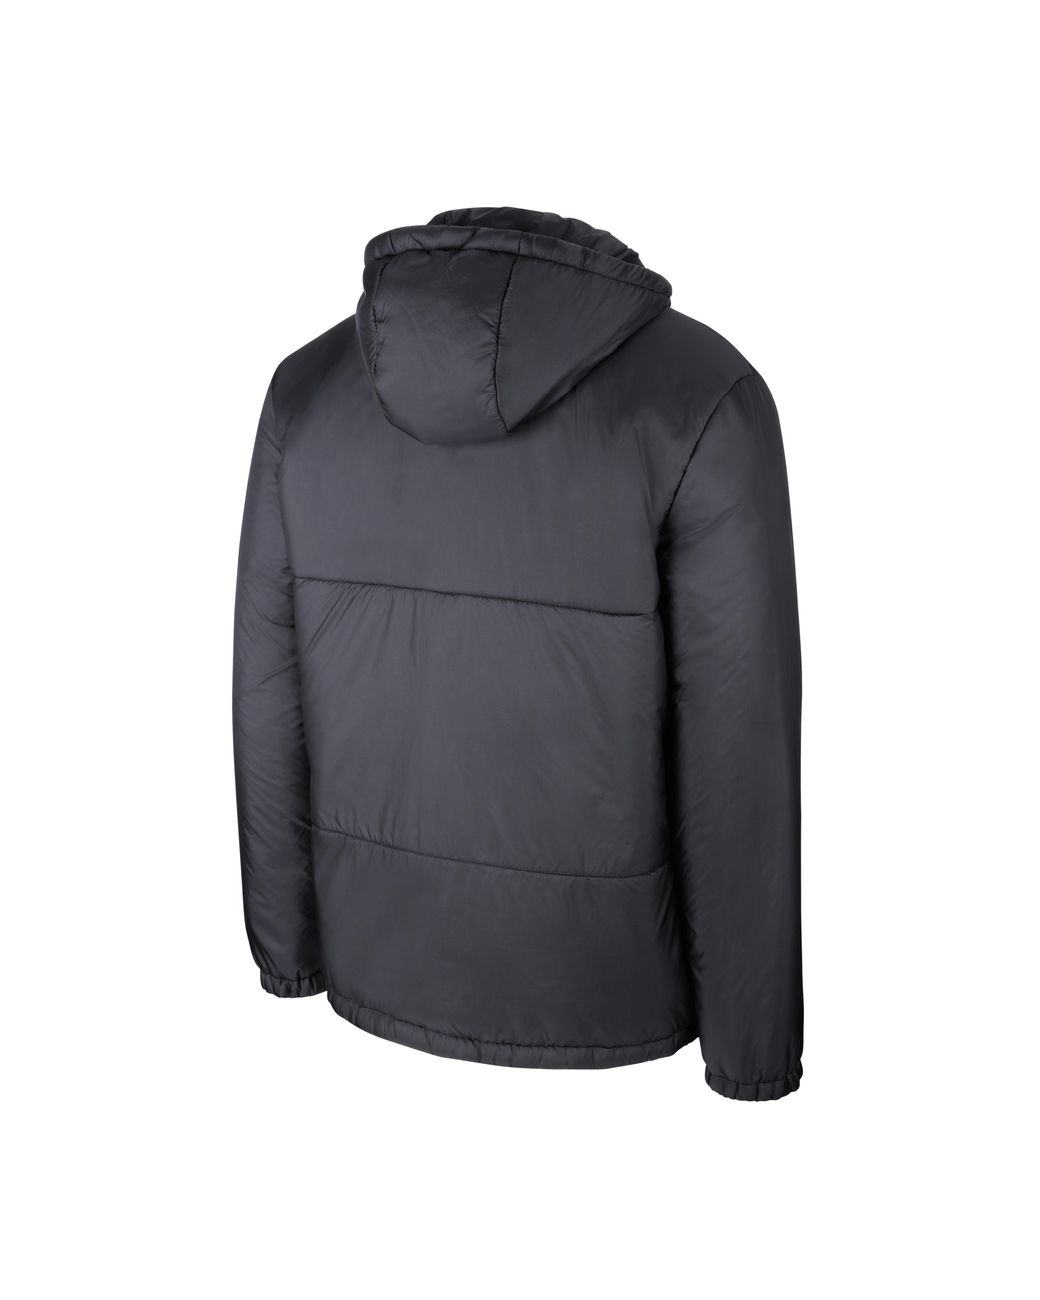 66 North Brimhólar Jackets & Coats in Black for Men - Lyst